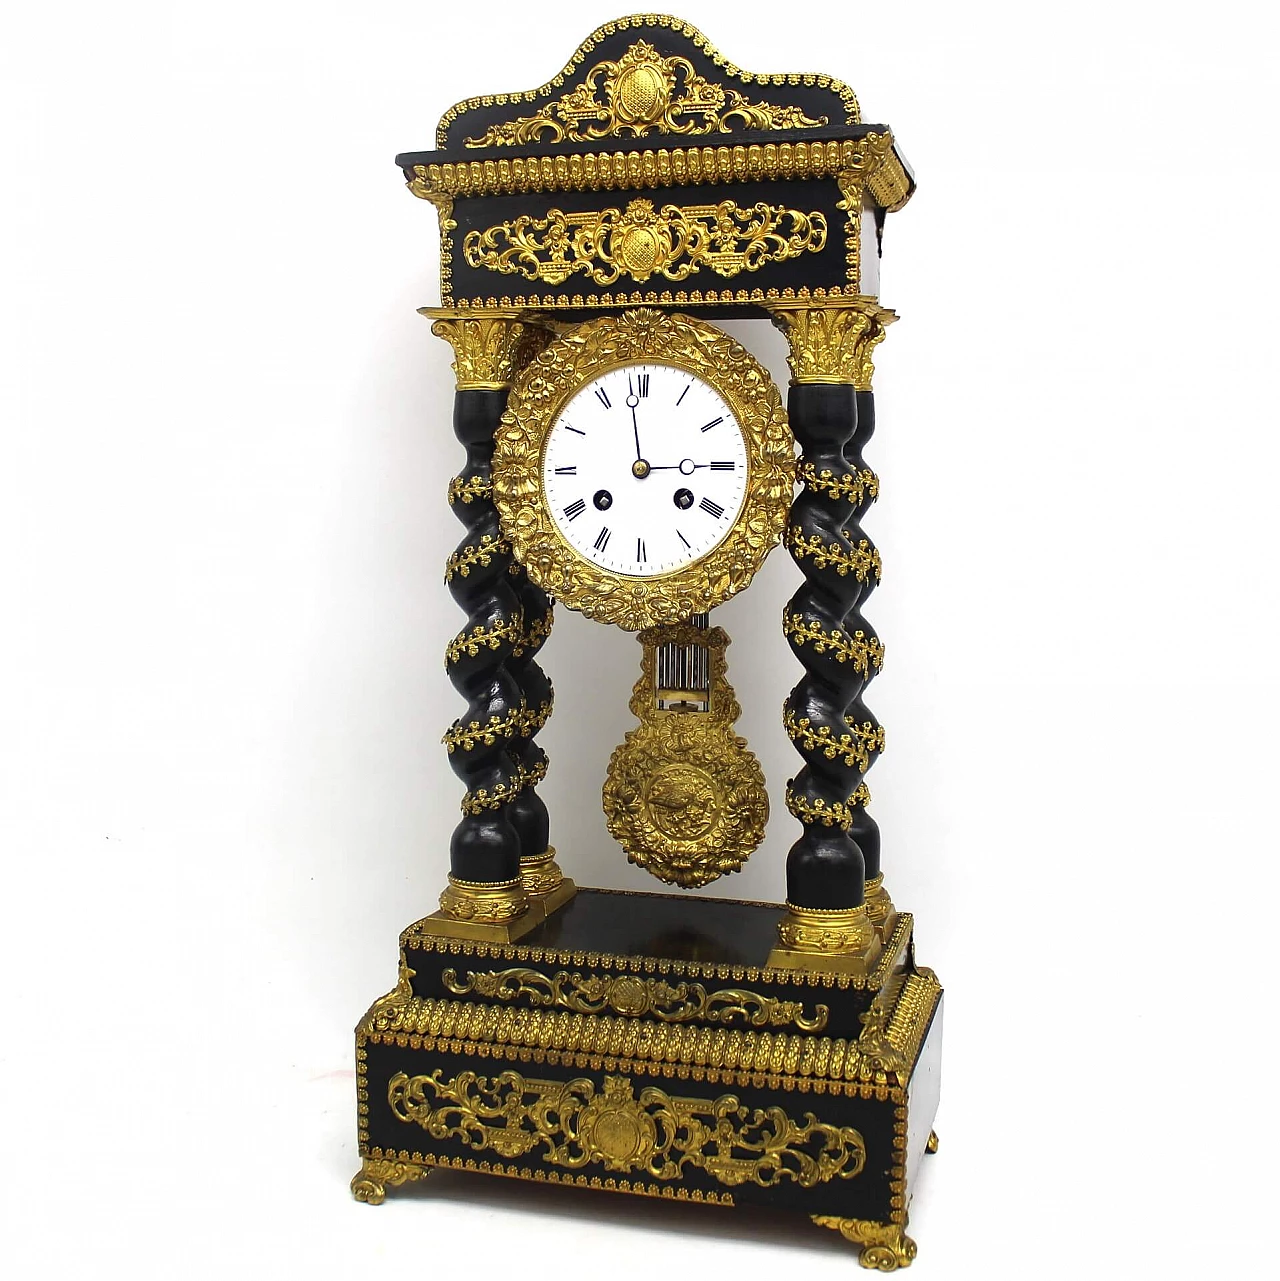 Napoleon III pendulum clock in ebonized wood and gilded bronzes, 19th century. 1336764